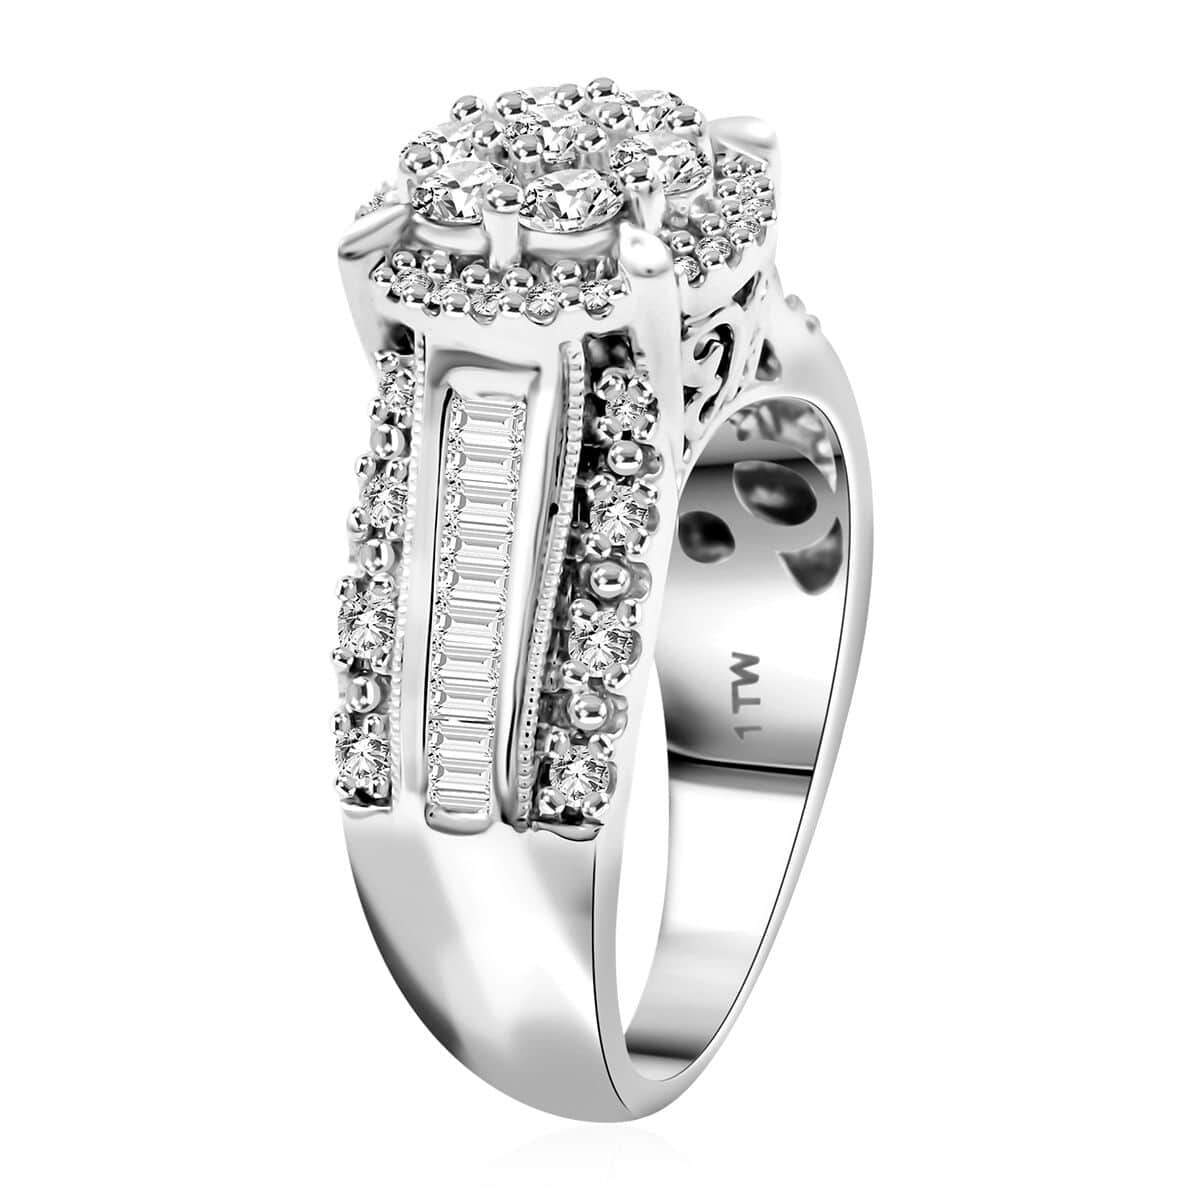 10K White Gold Diamond I2-I3 Ring (Size 6.0) 5.85 Grams 1.00 ctw (Del. in 10-12 Days) image number 3